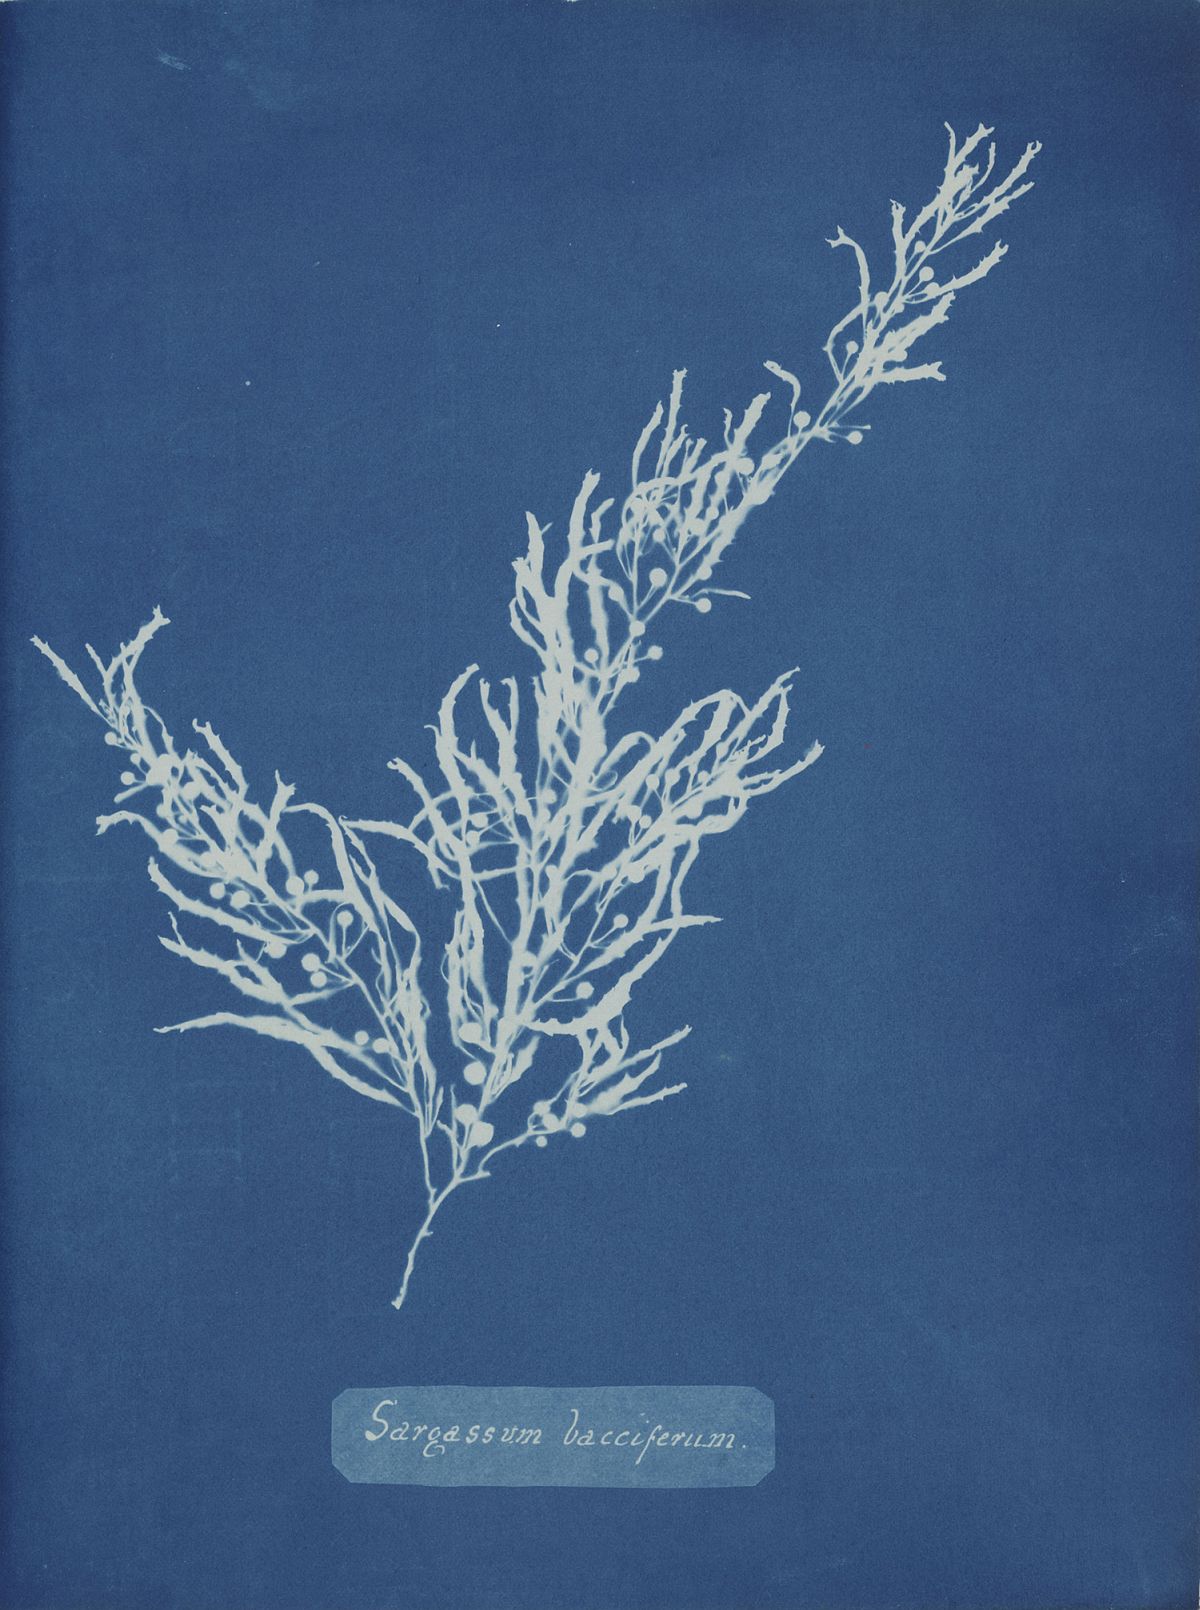 A cyanotype photogram made by Anna Atkins